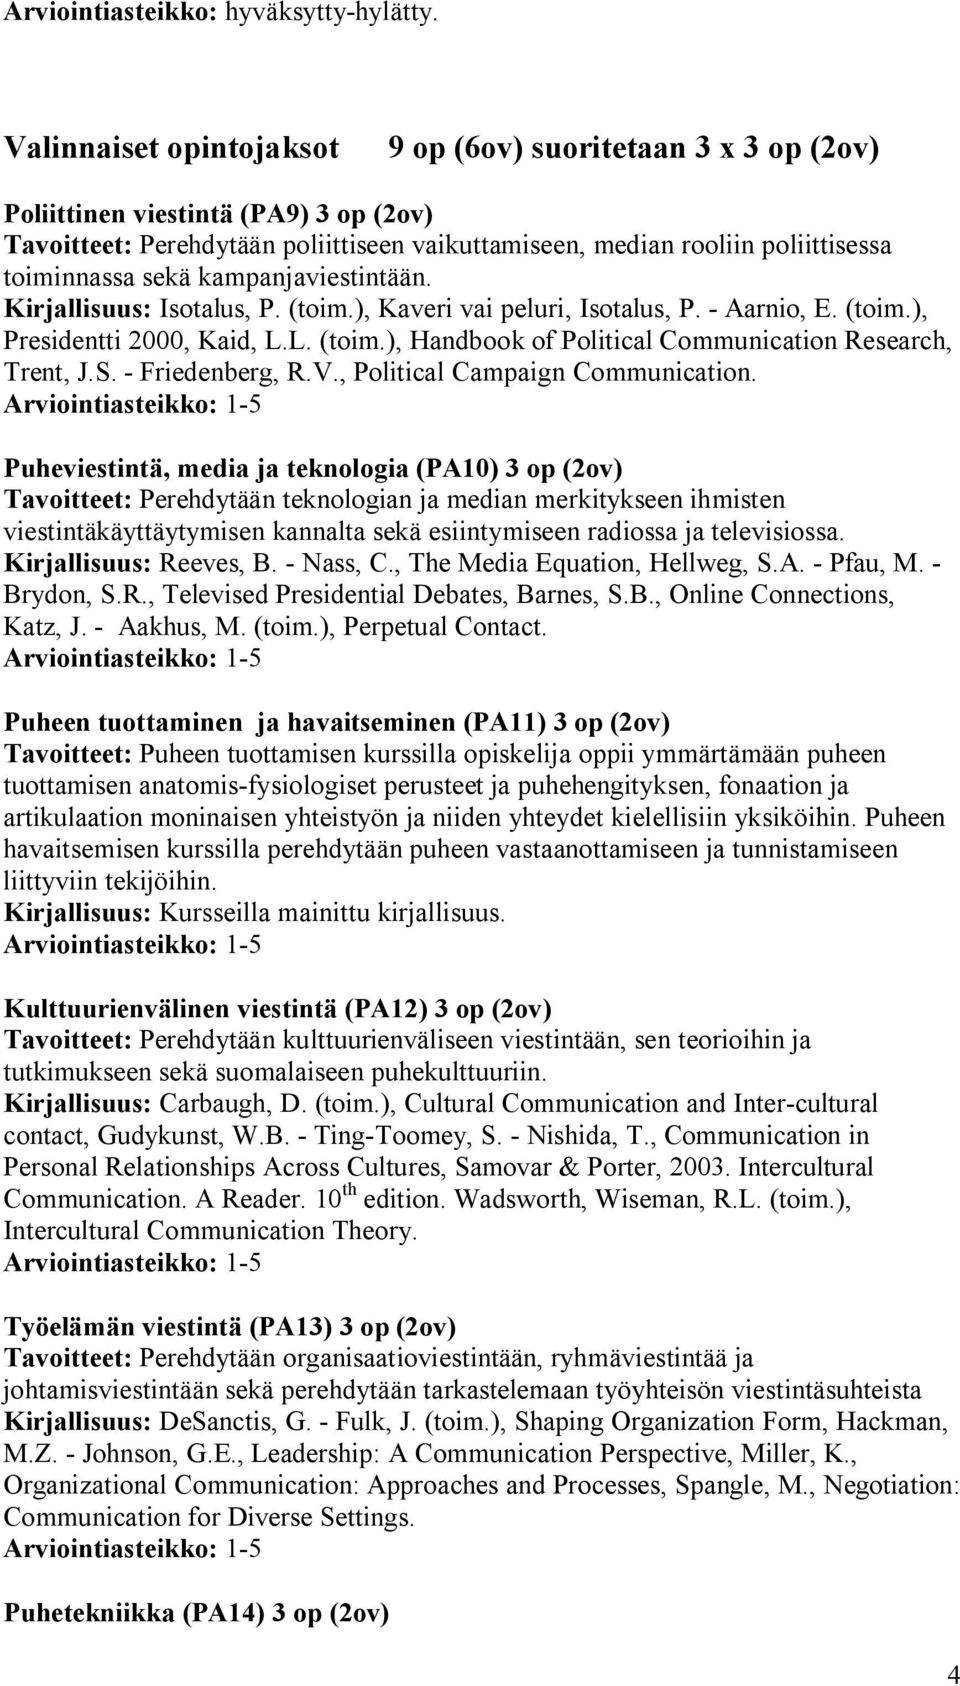 sekä kampanjaviestintään. Kirjallisuus: Isotalus, P. (toim.), Kaveri vai peluri, Isotalus, P. - Aarnio, E. (toim.), Presidentti 2000, Kaid, L.L. (toim.), Handbook of Political Communication Research, Trent, J.